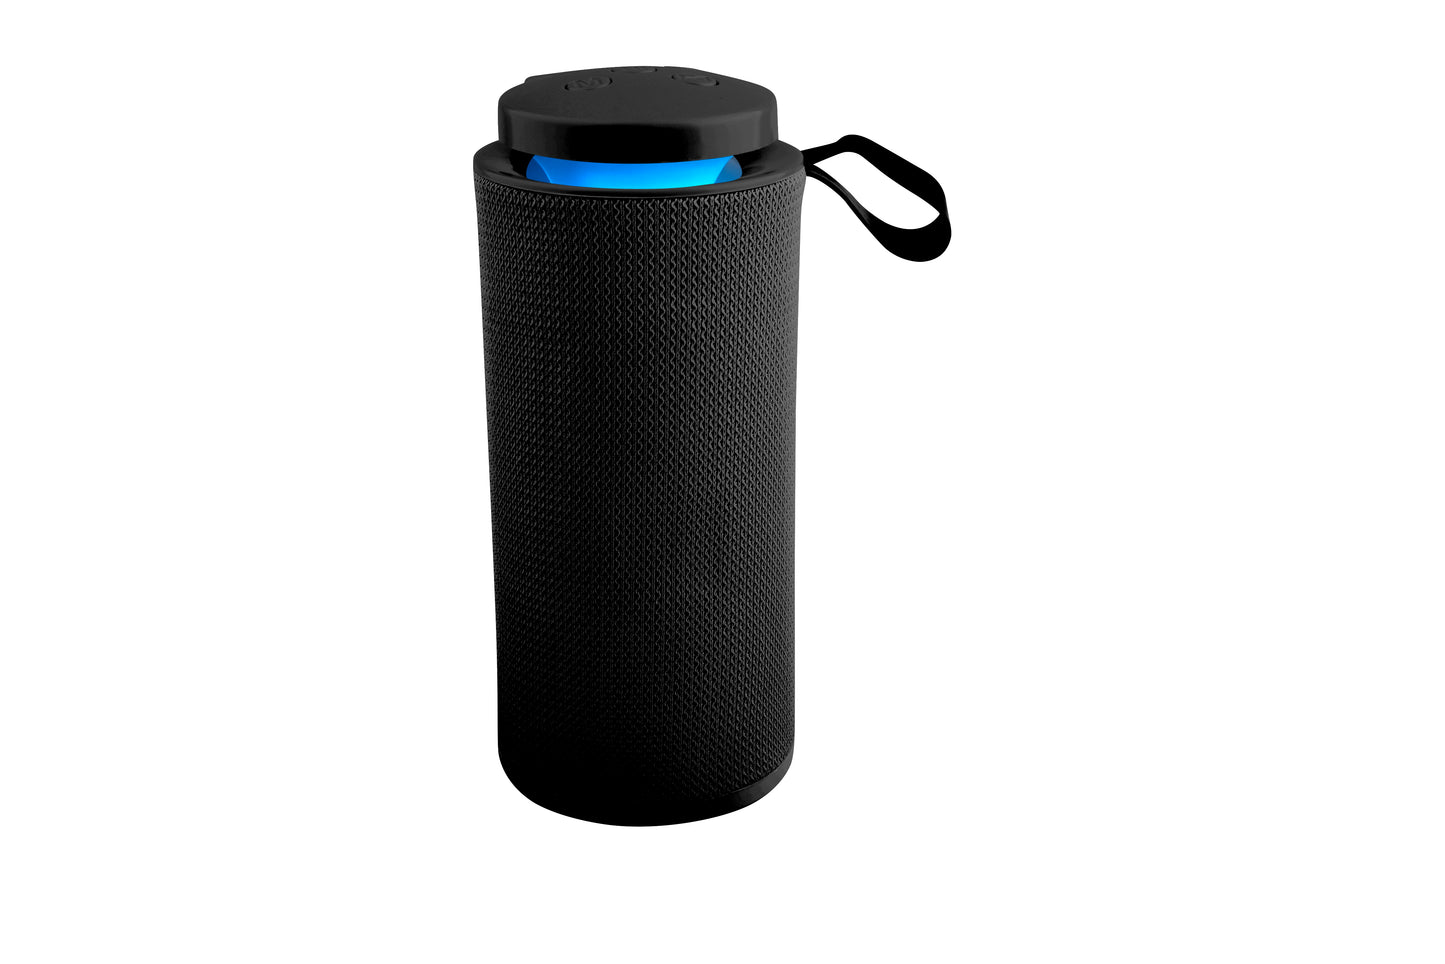 LAUD Portable Wireless Speaker - Bluetooth Speaker with RGB LED Display